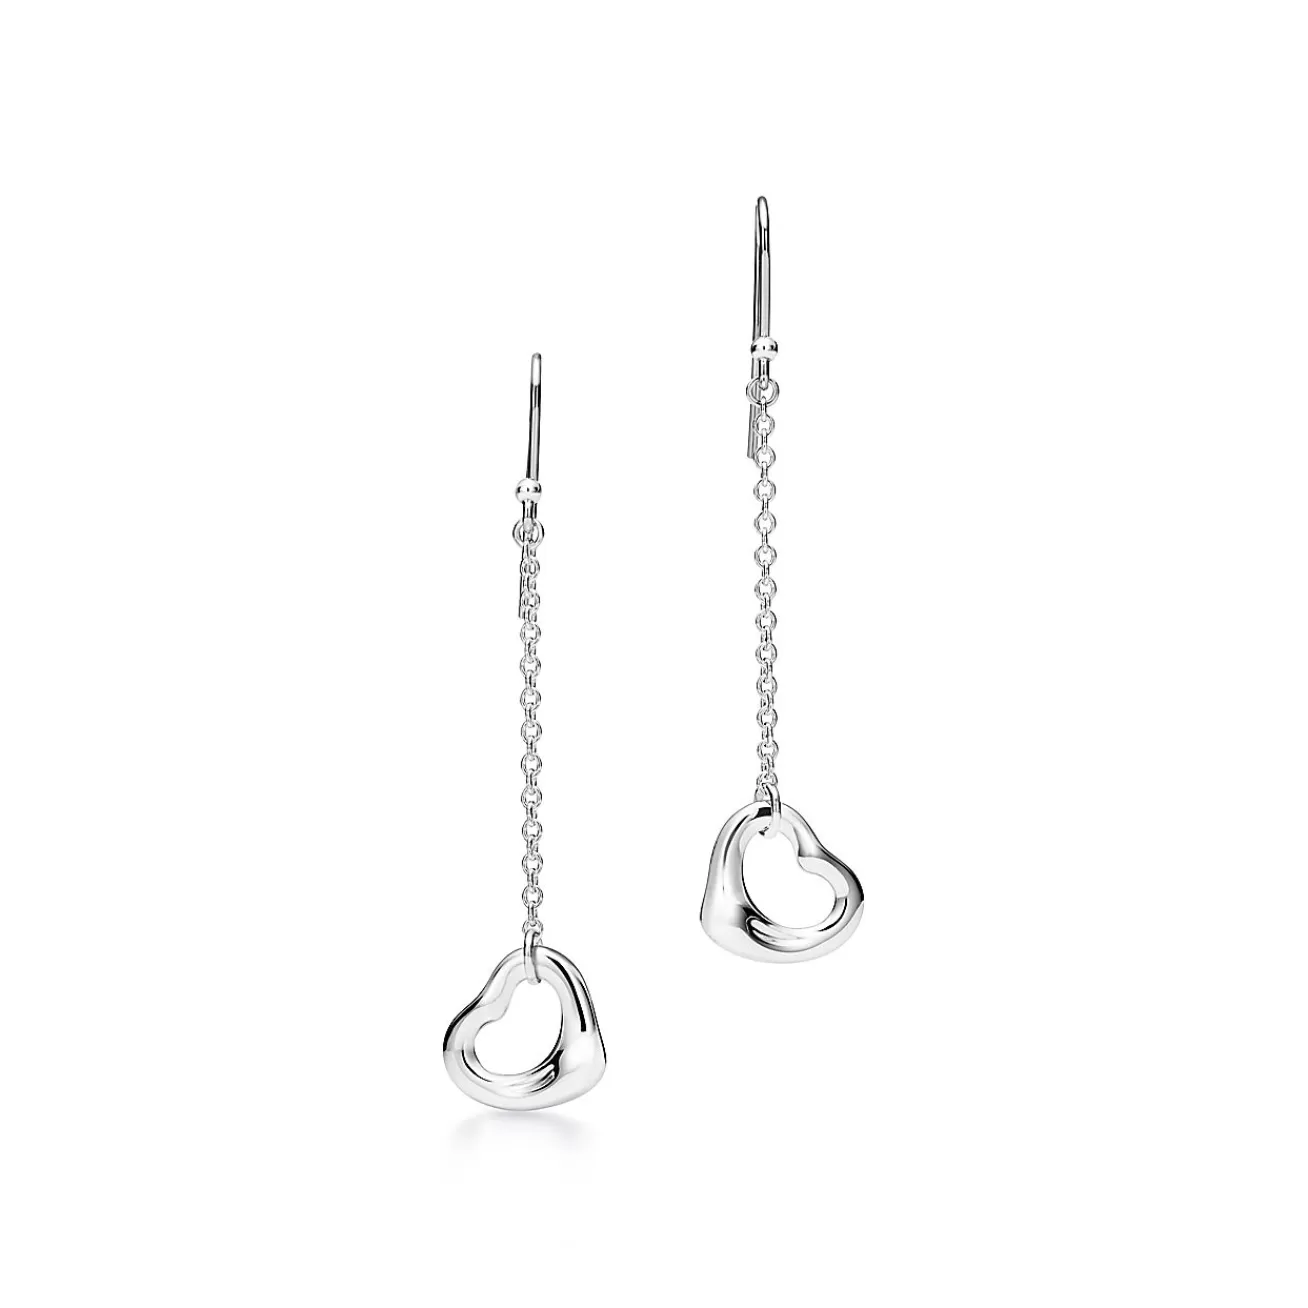 Tiffany & Co. Elsa Peretti® Open Heart drop earrings in sterling silver. | ^ Earrings | Sterling Silver Jewelry